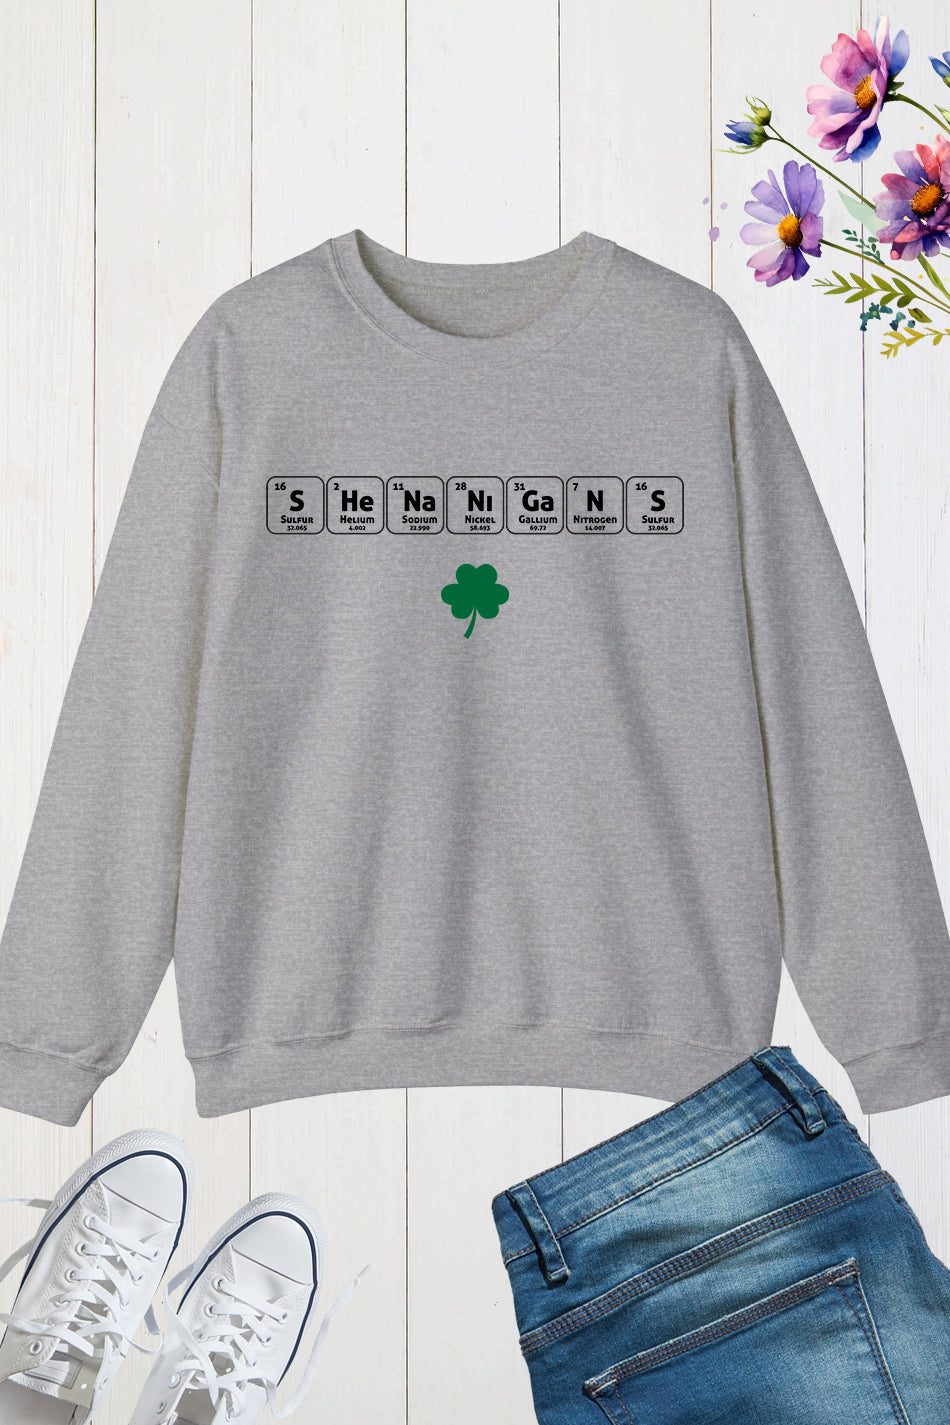 Shenanigans St. Patrick's Day Elements Funny Sweatshirts